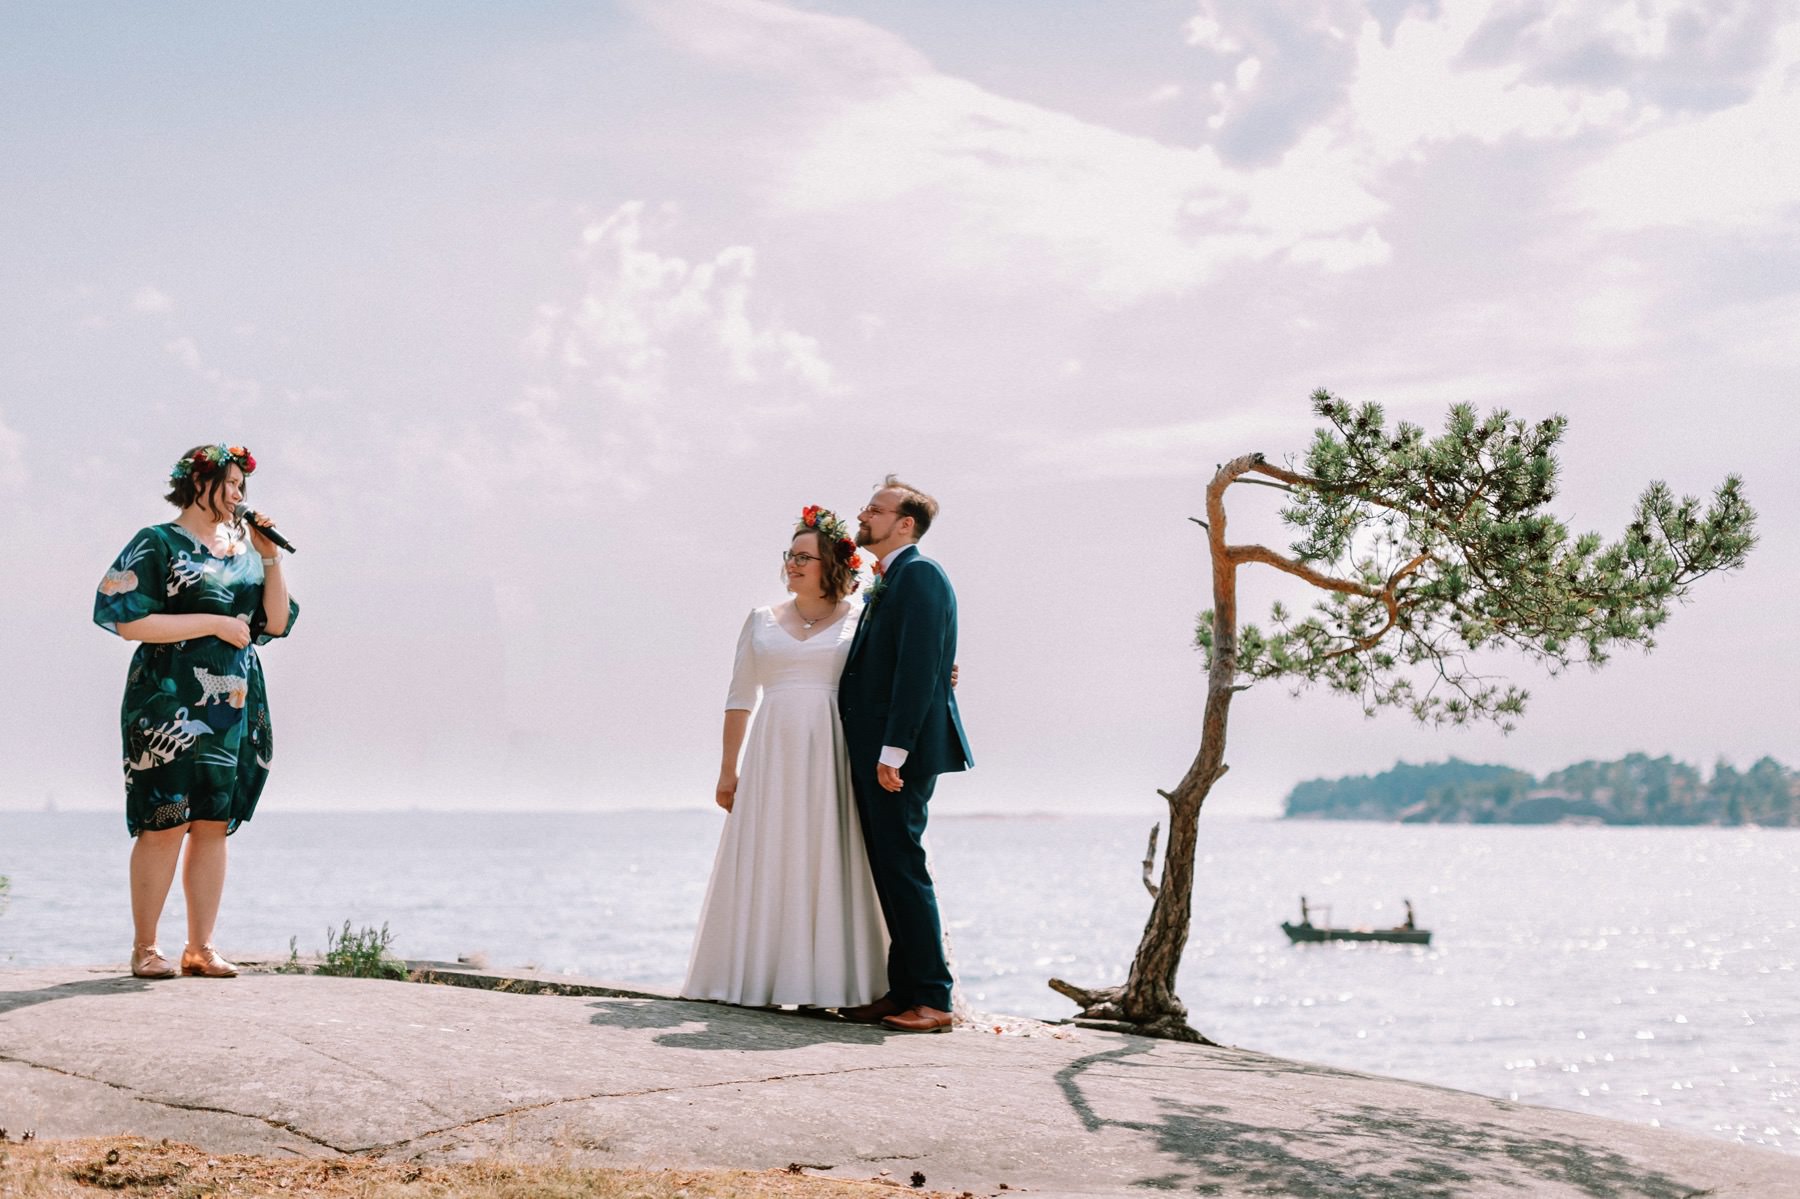 Finland wedding photographer